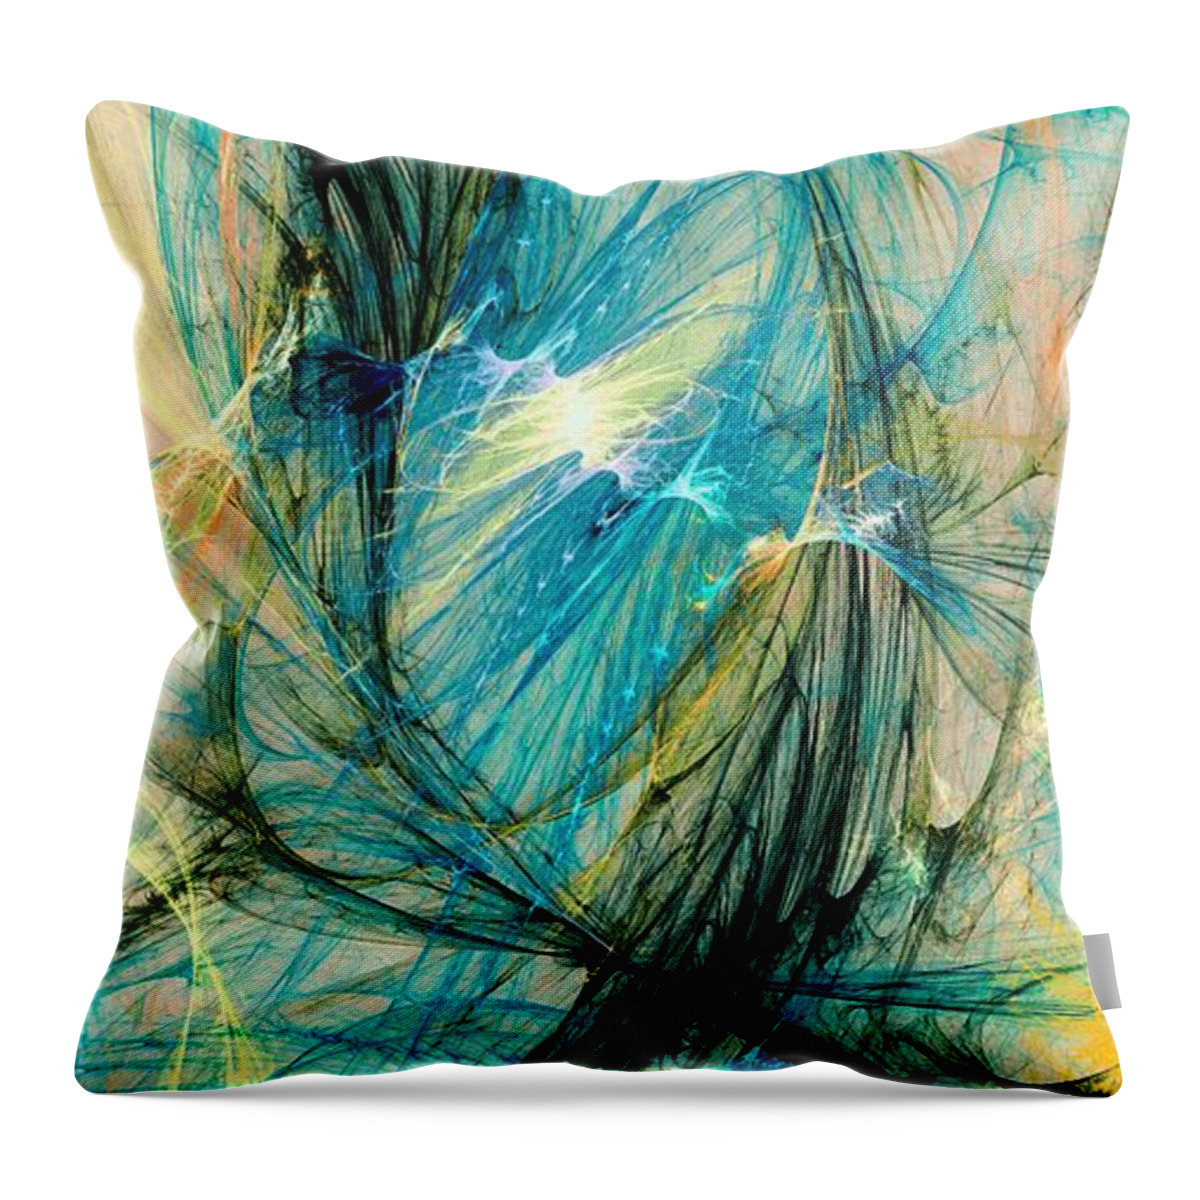 Malakhova Throw Pillow featuring the digital art Blue Phoenix by Anastasiya Malakhova